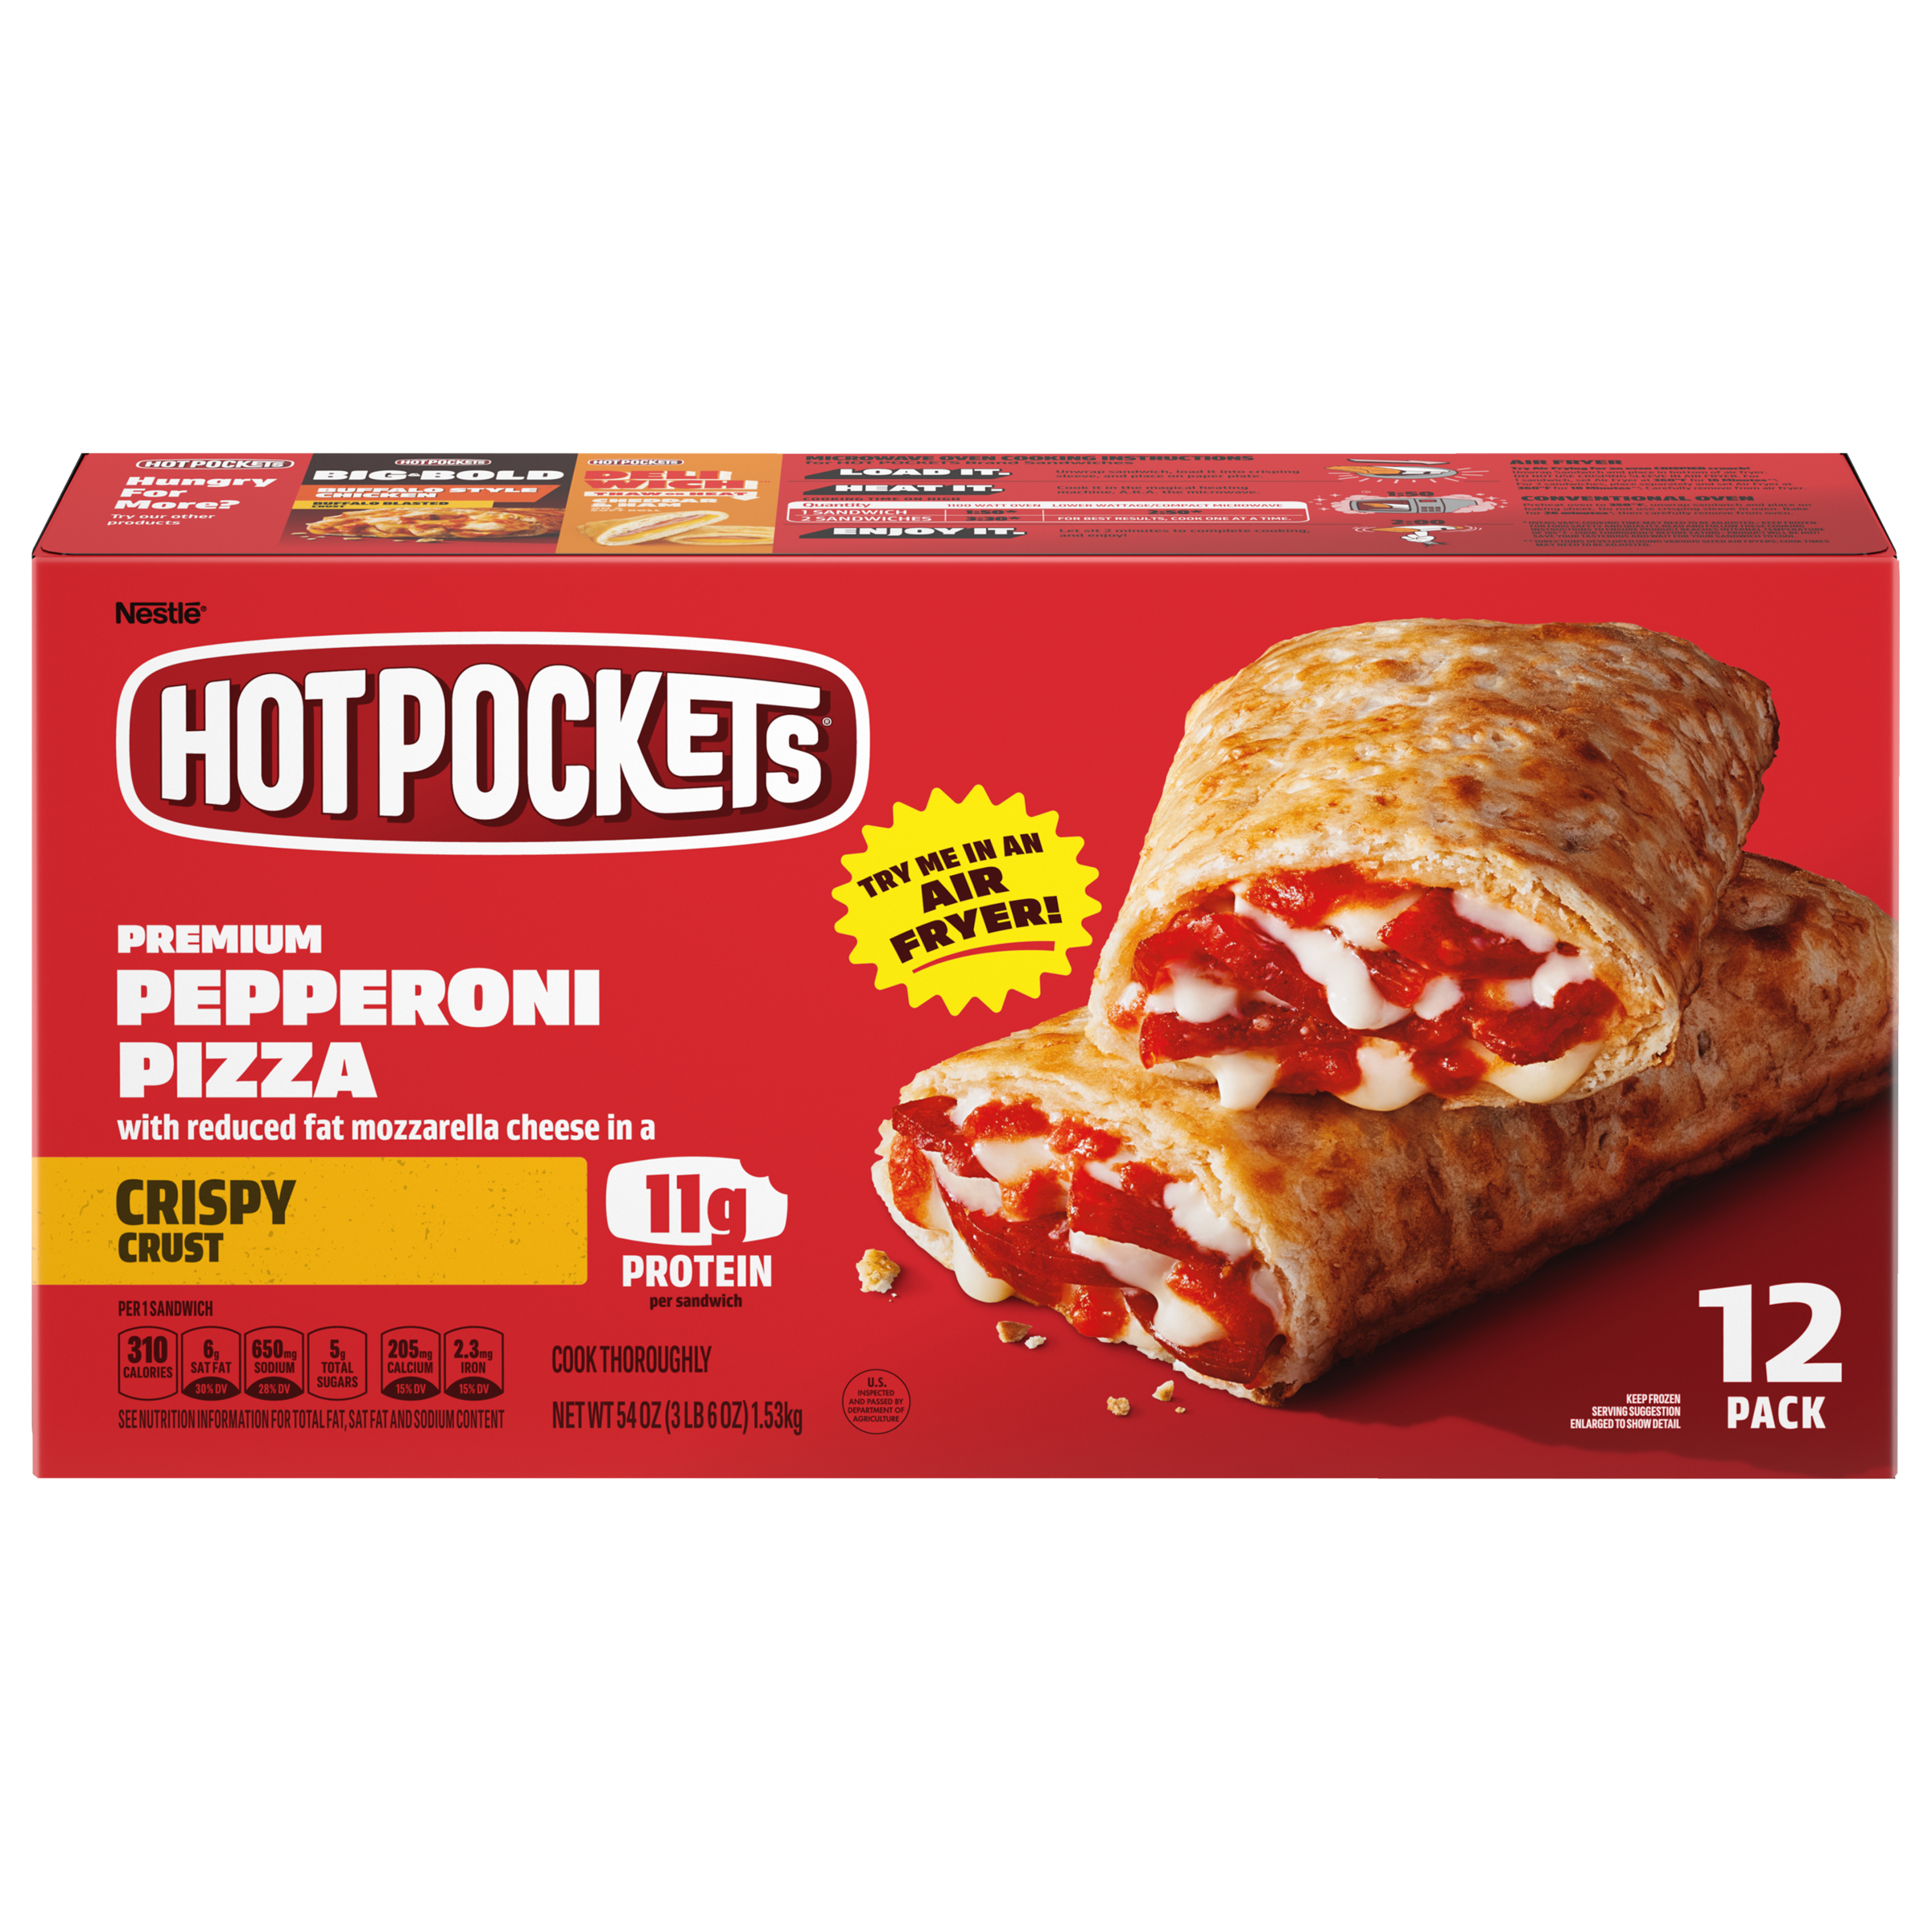 HOT POCKETS Crispy Crust Premium Pepperoni Pizza 4 units per case 54.0 oz